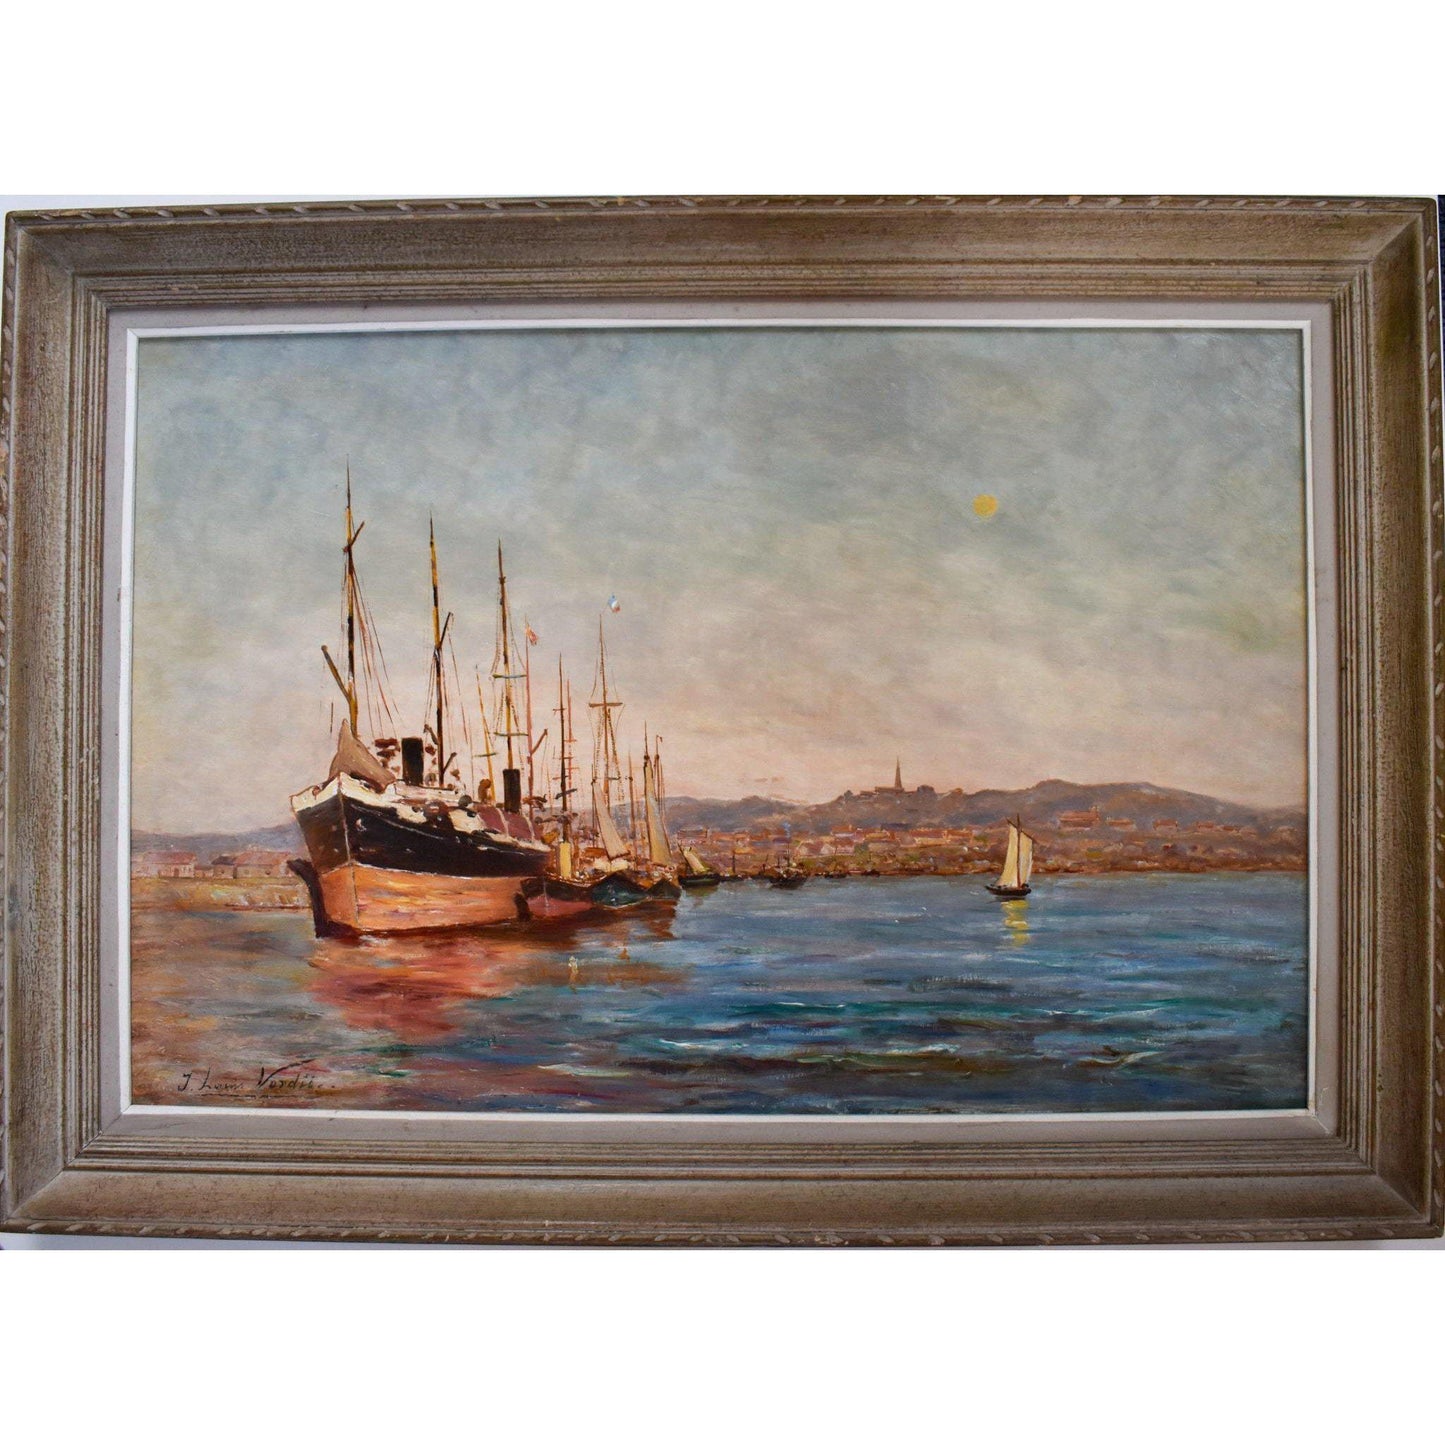 Antique seascape oil painting boats port scene circa 1900 by Jean Louis Verdie for sale at Winckelmann Gallery